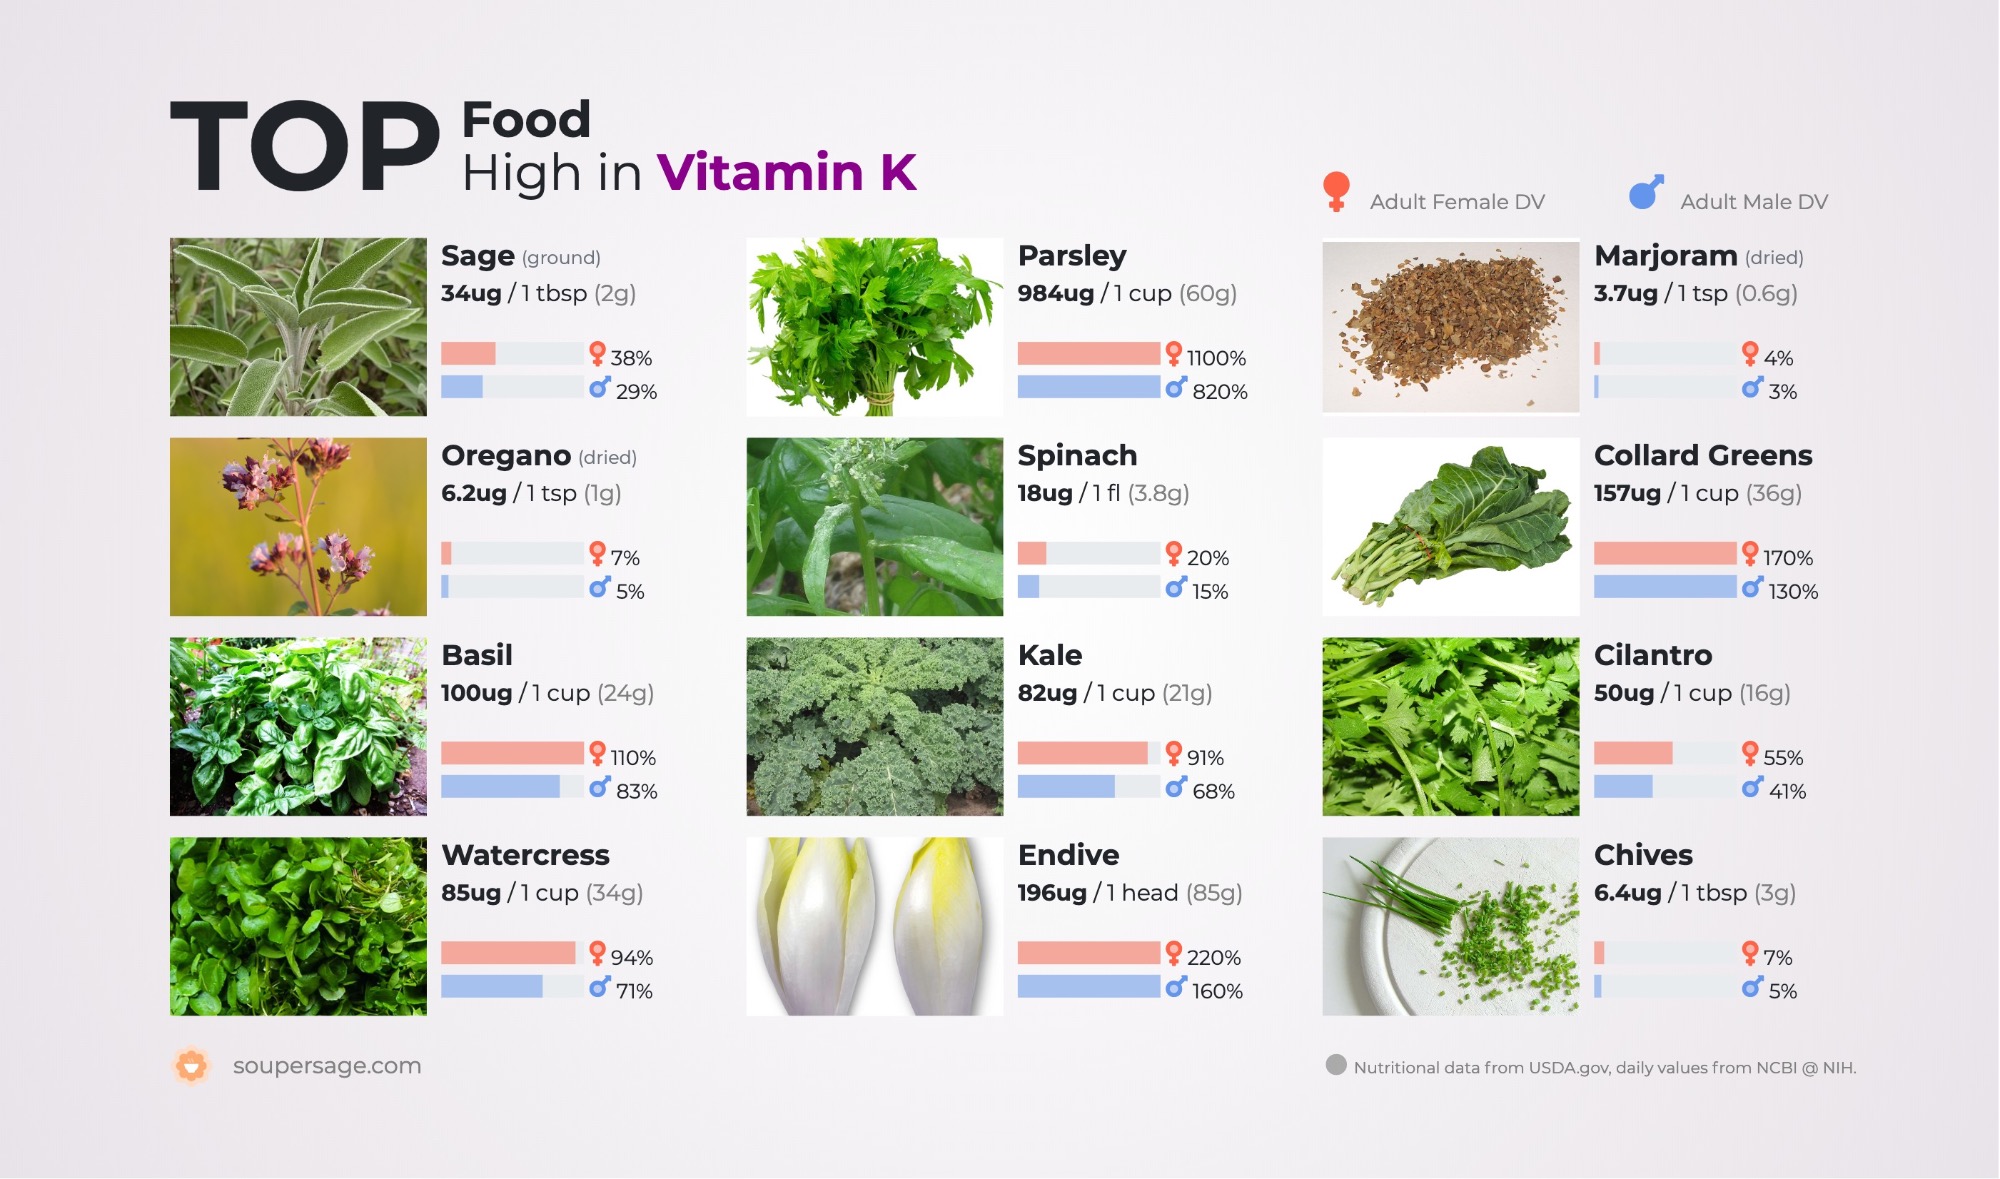 image of Top Food High in Vitamin K